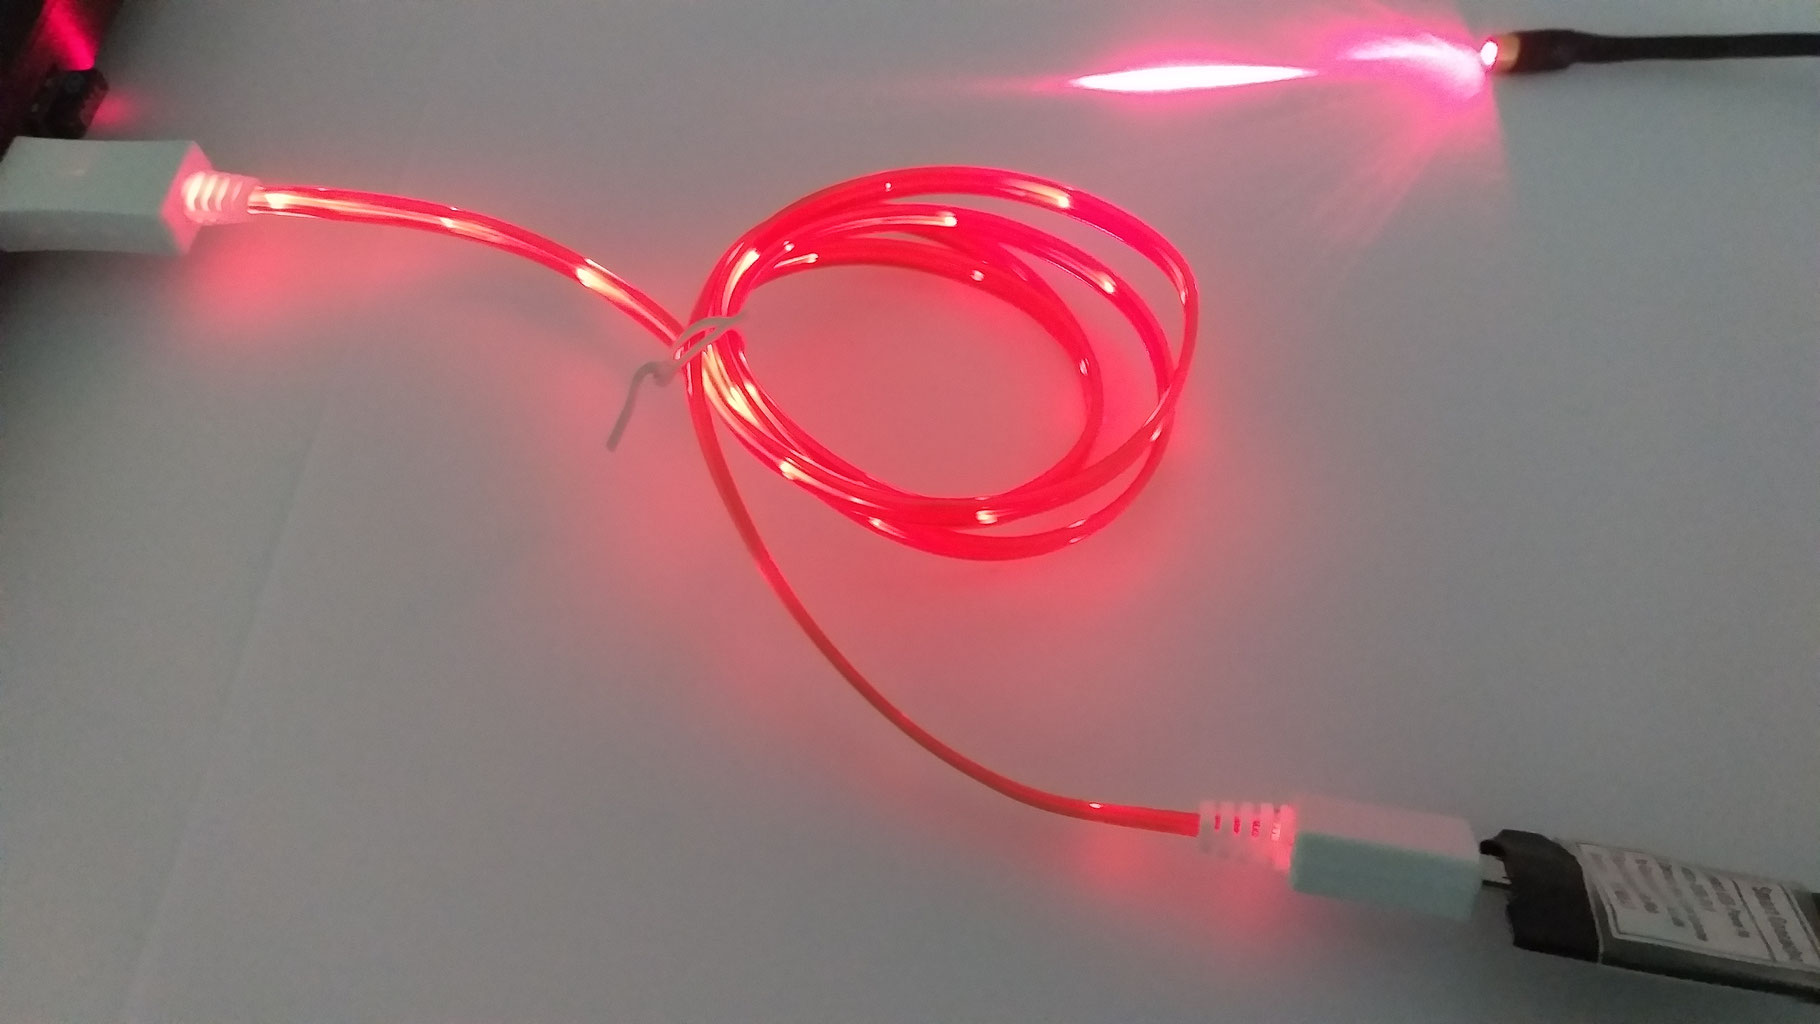 Micro-USB-Kabel mit LED Licht (blaue LEDS) - SmartGeocaching